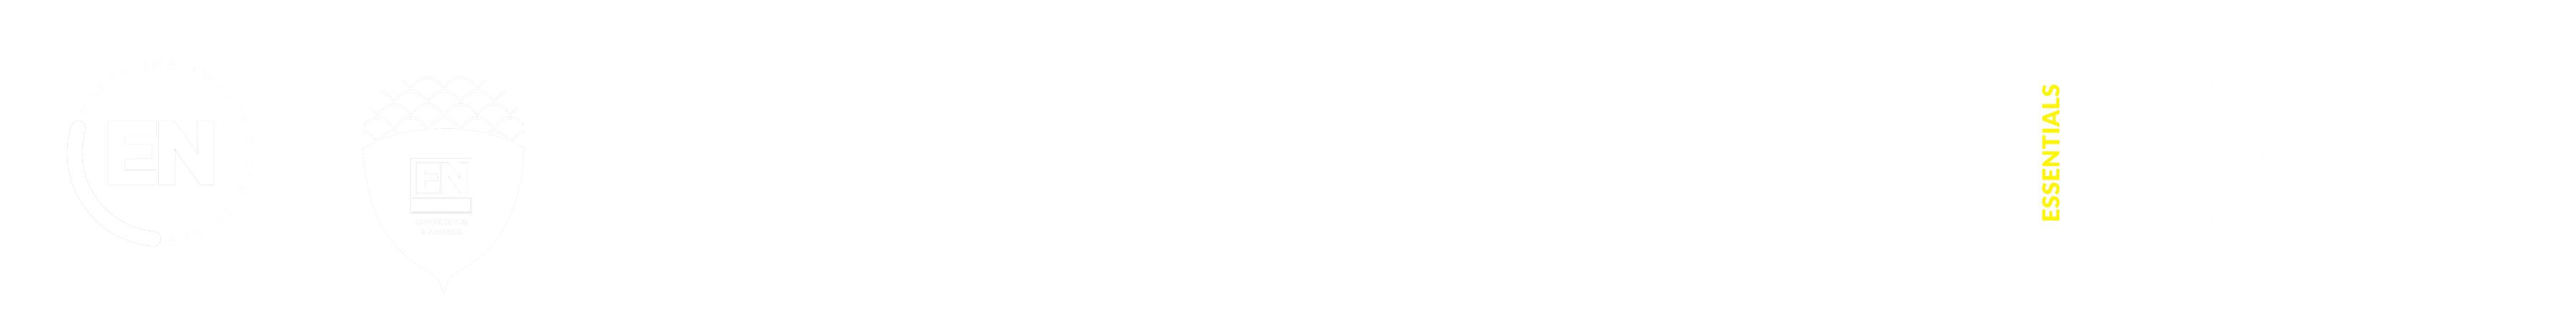 Logos for EN